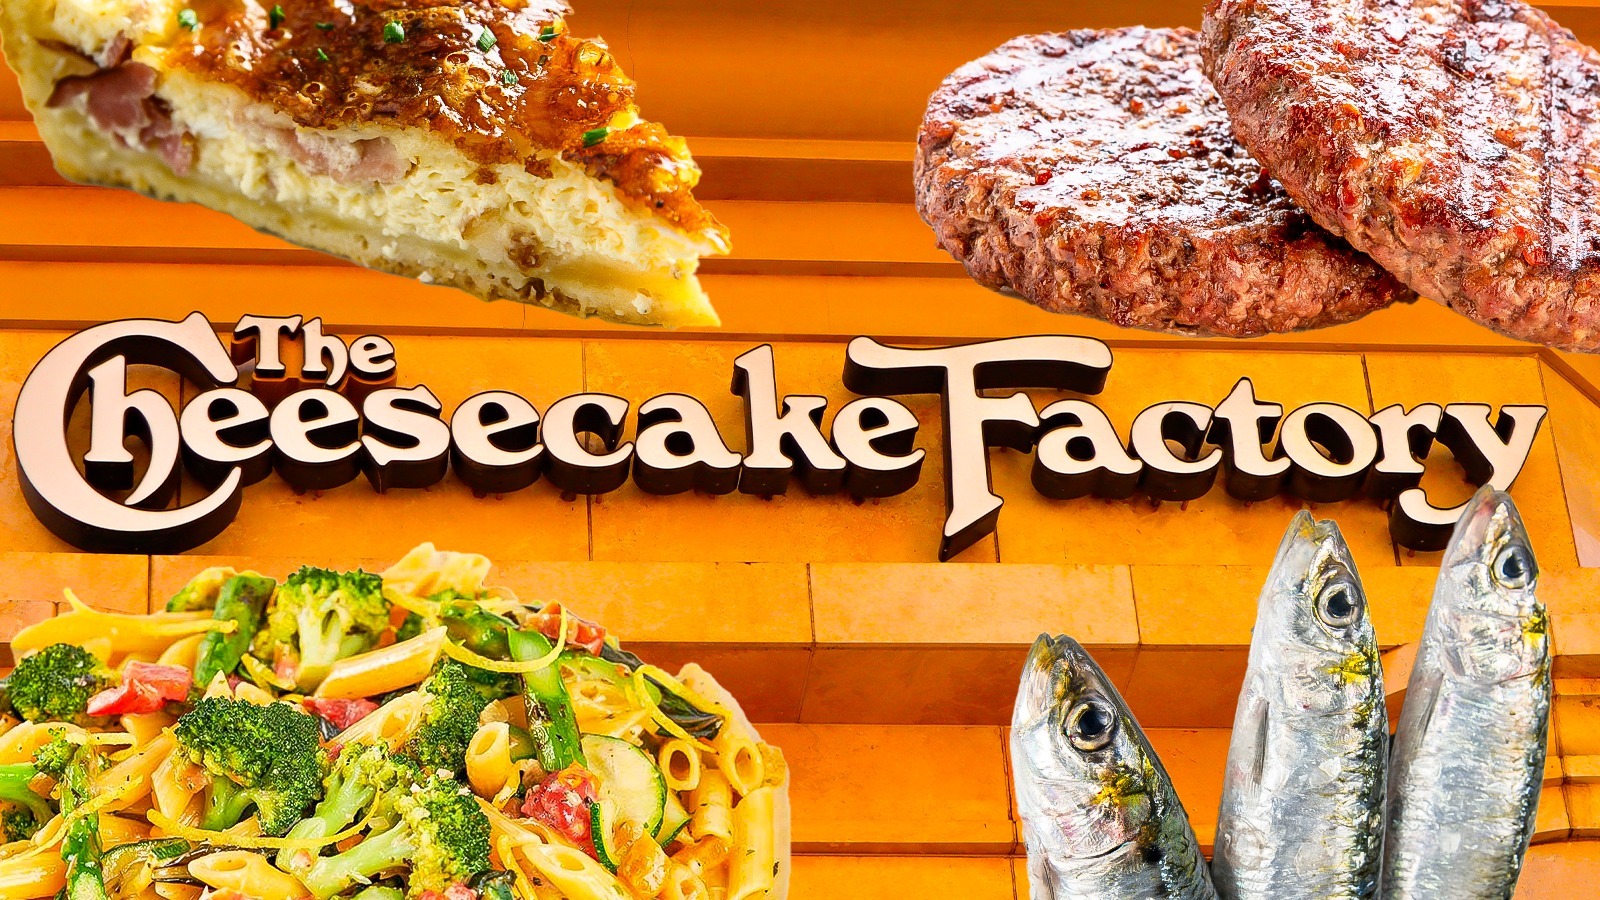 13 Original Cheesecake Factory Items No Longer On The Menu Exclusive